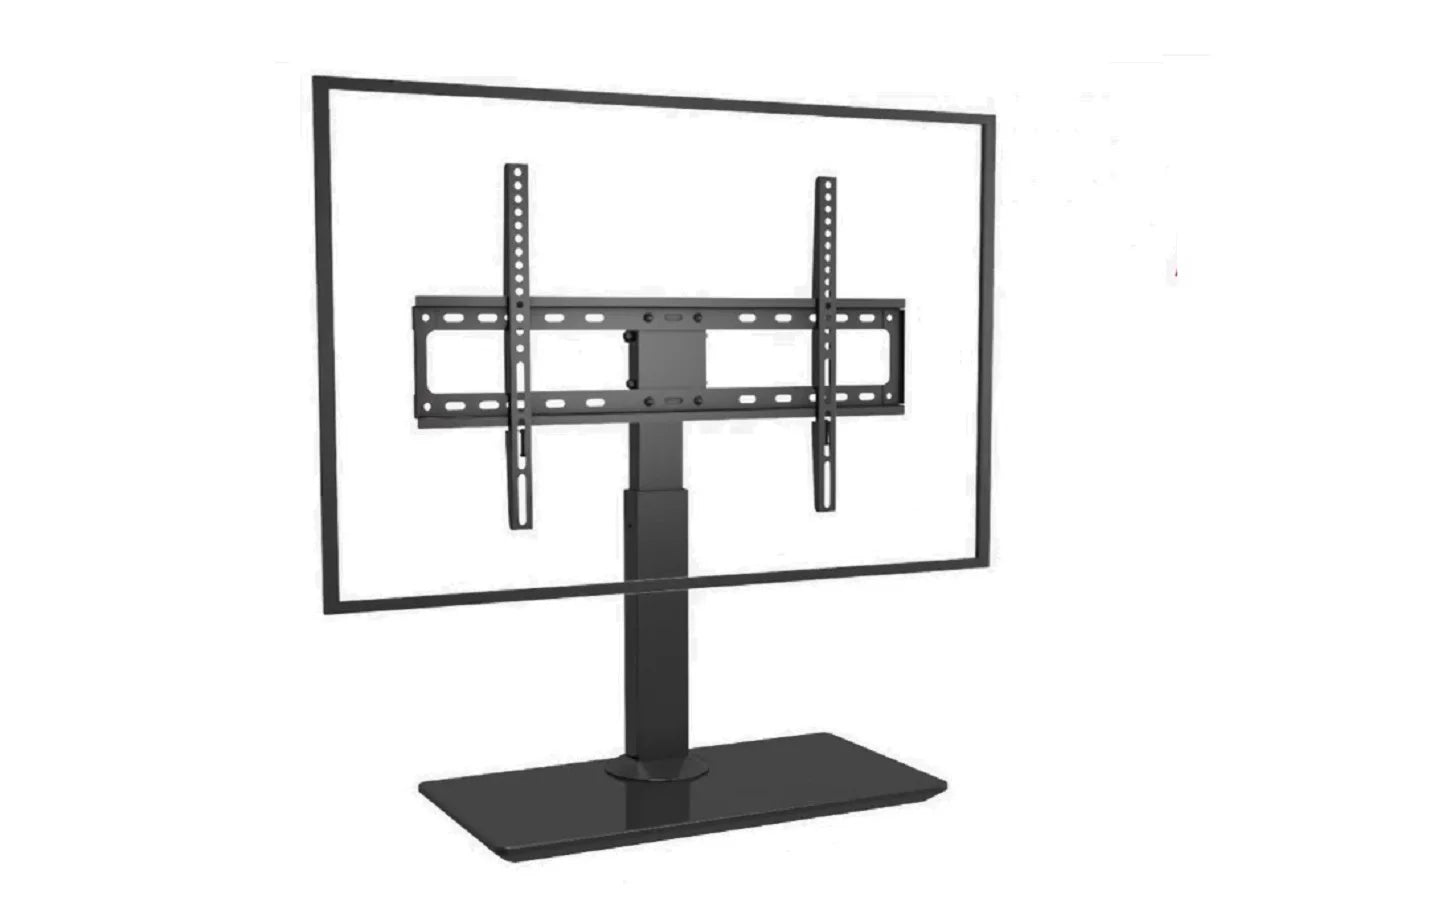 SkillTech - SH 3270B - Universal Swivel Tabletop Tv Stand With Glass Base Ergonomic Mount